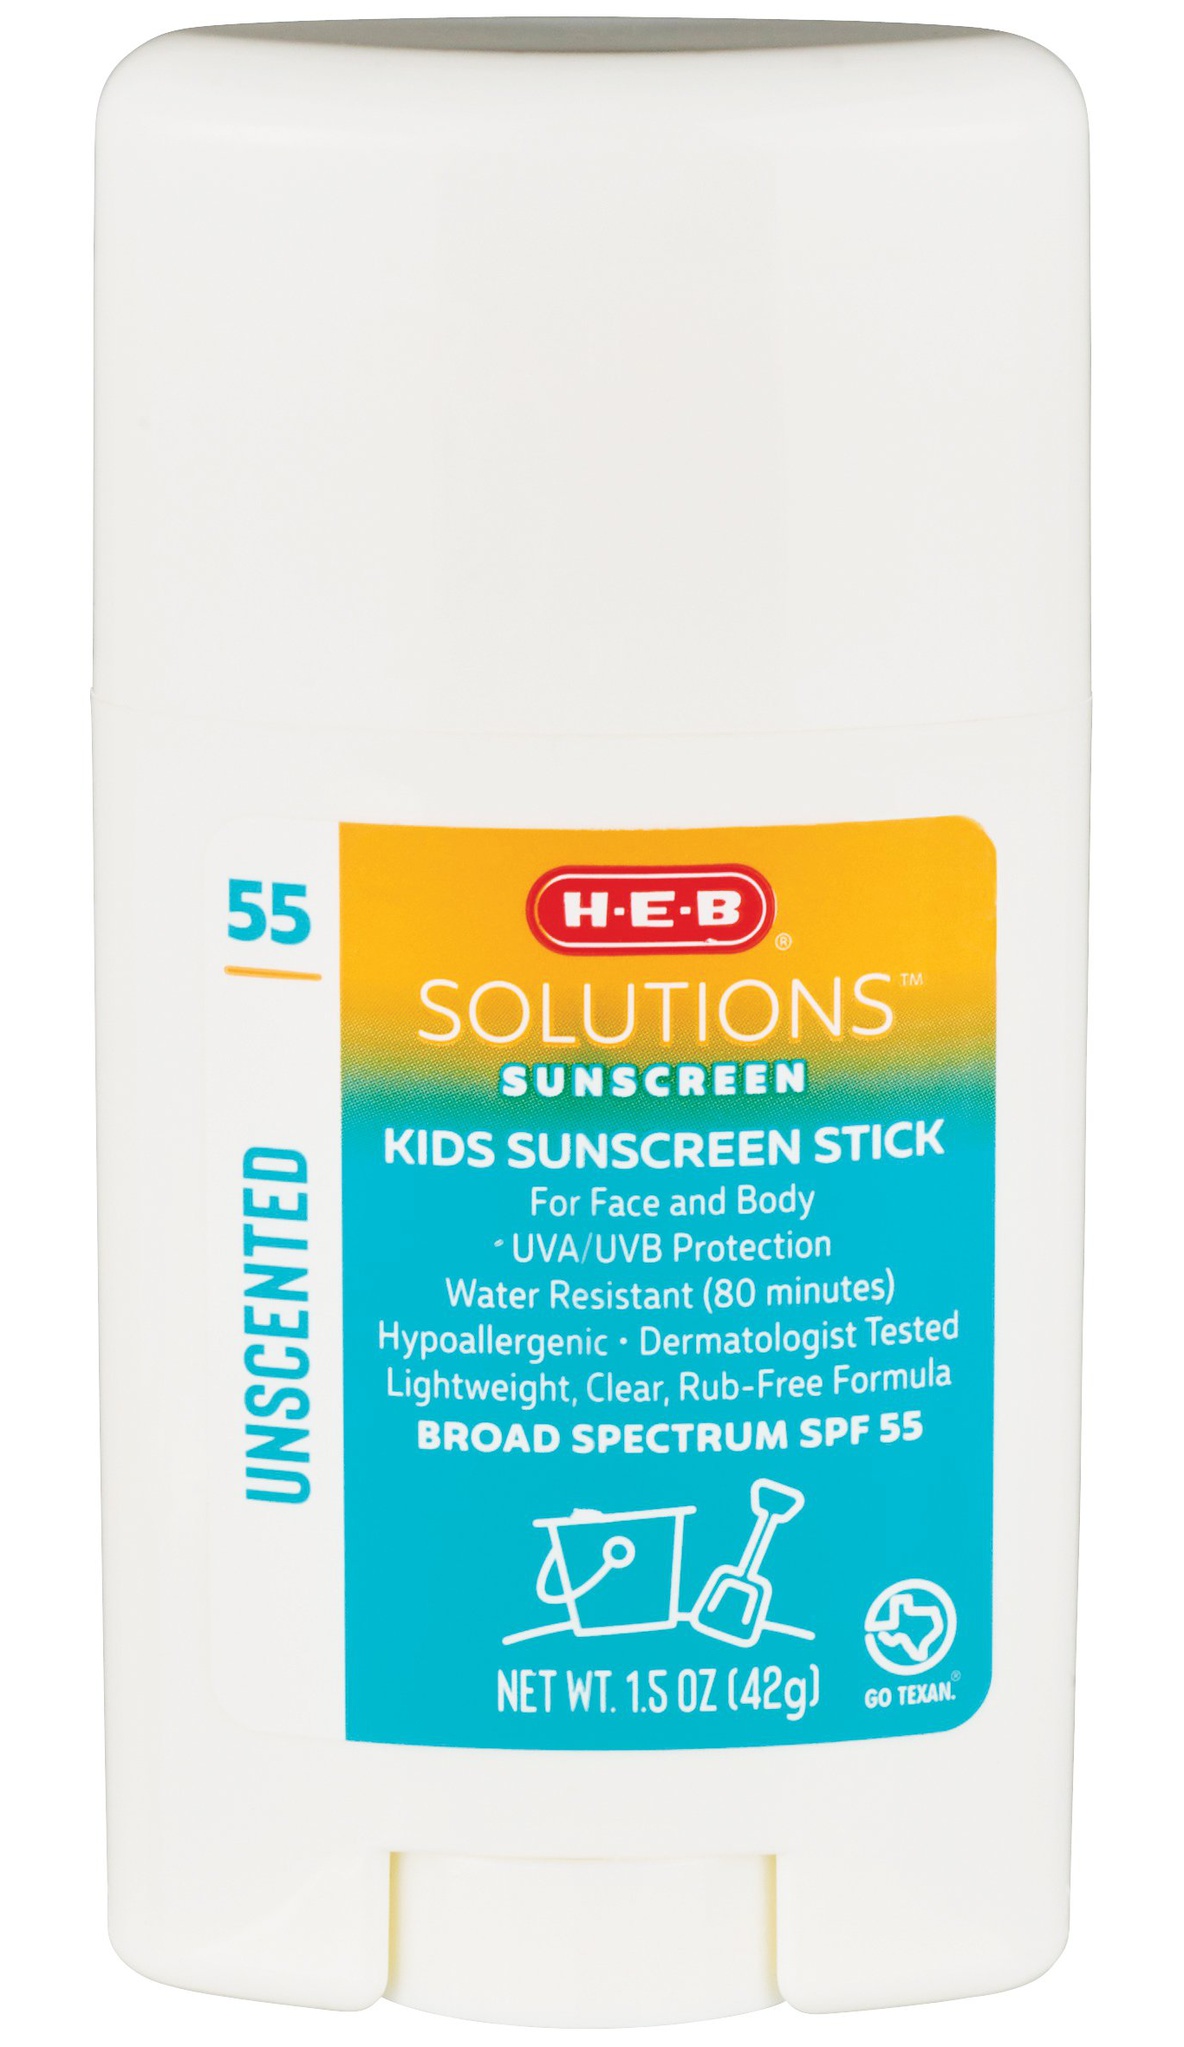 H-E-B Solutions Sunscreen SPF 55